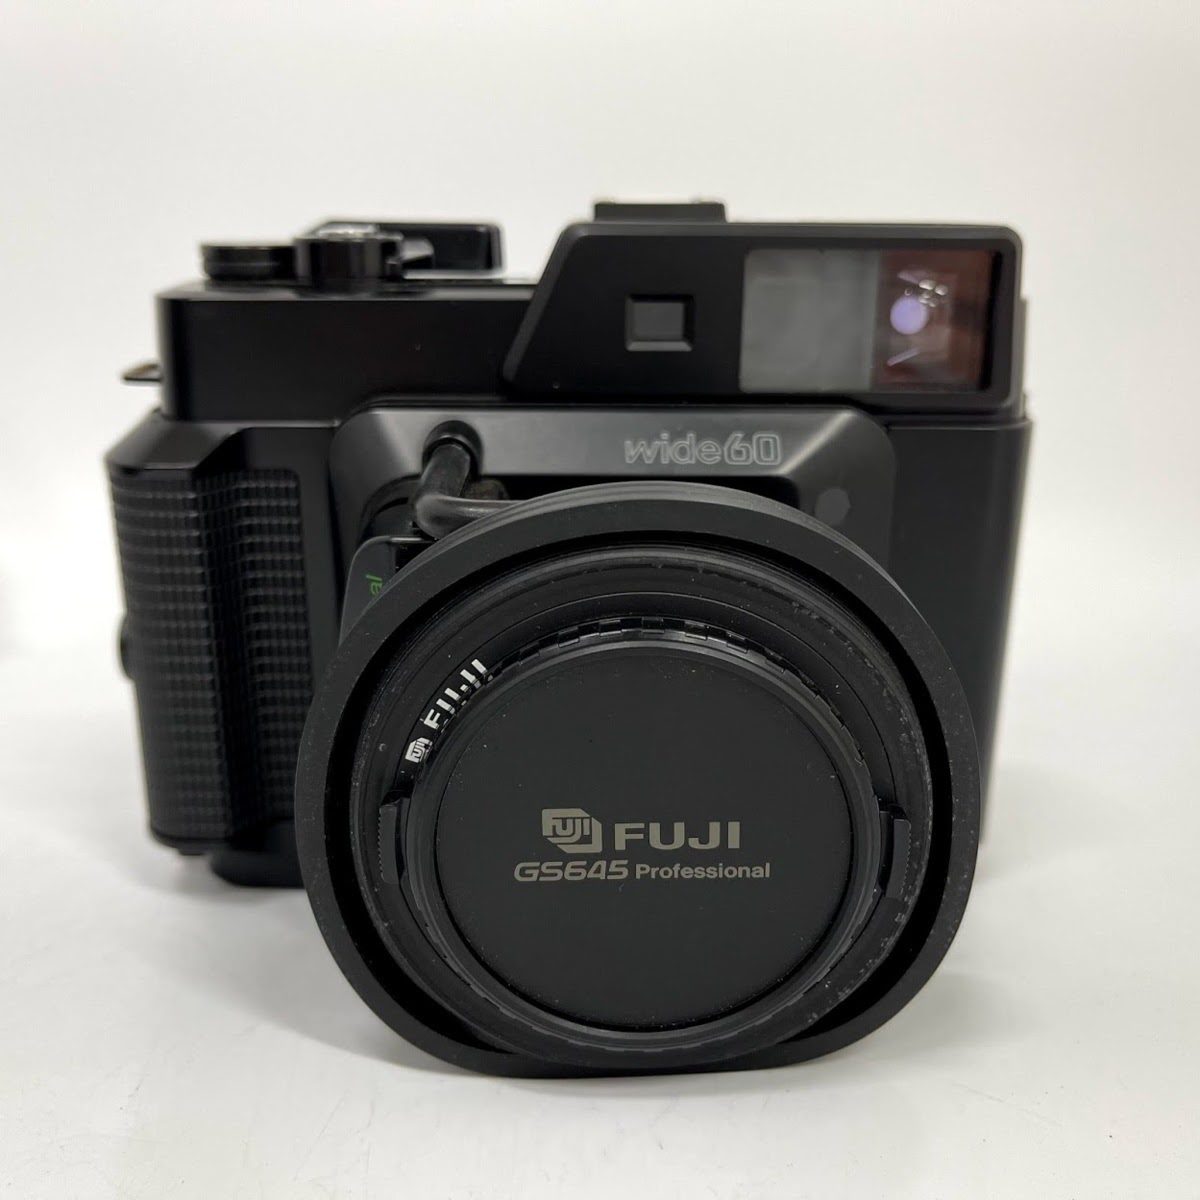 FUJI フジ 6x4.5 GS645S Professional wide60 EBC FUJINON W 60mm F4 中判フイルムカメラ レンジファインダー